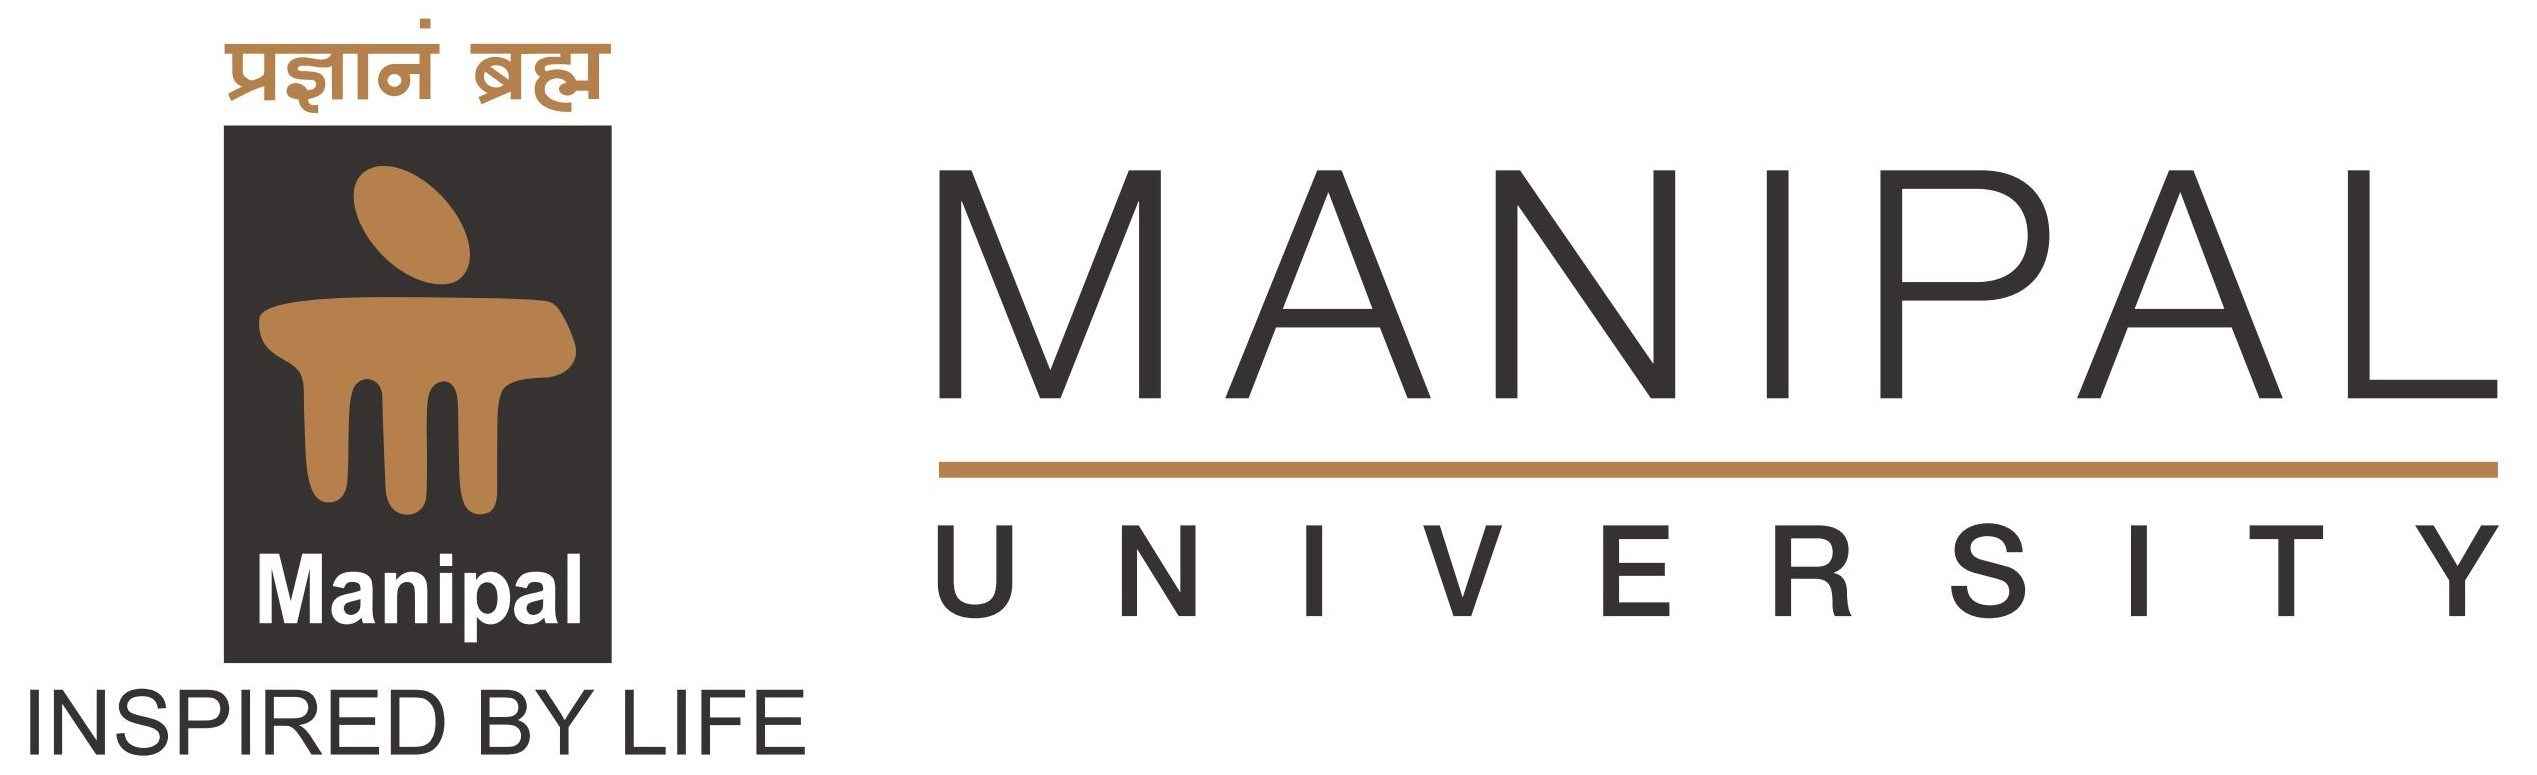 Manipal University Logo [EPS File]